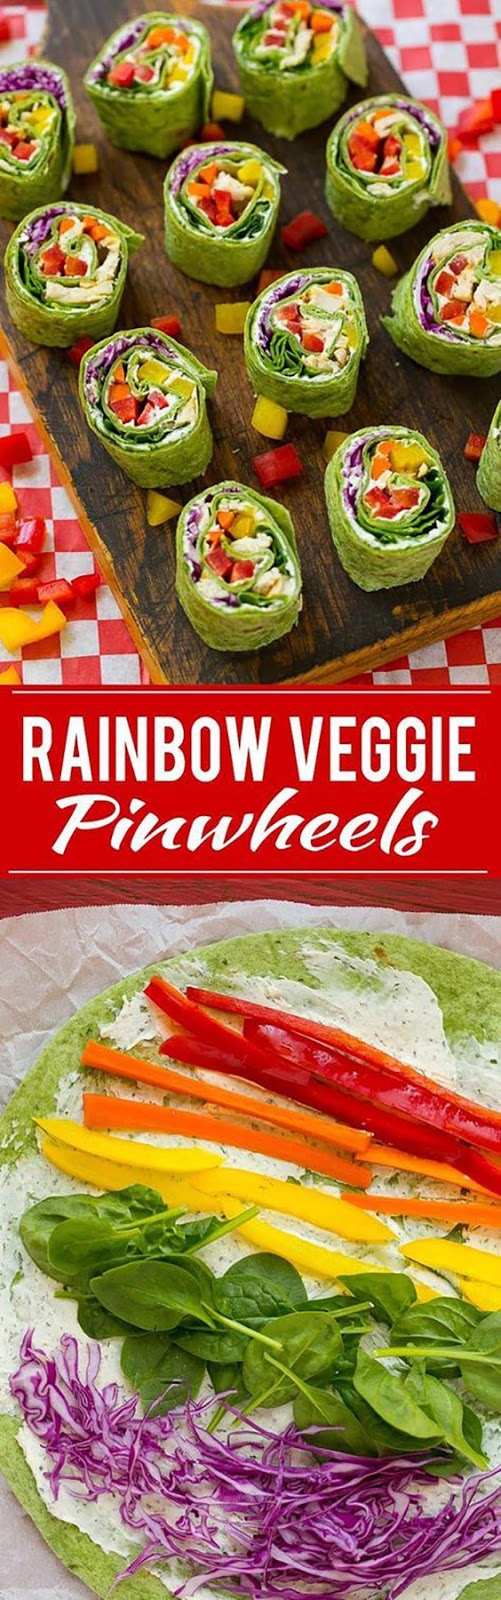 Rainbow Veggie Pinwheels